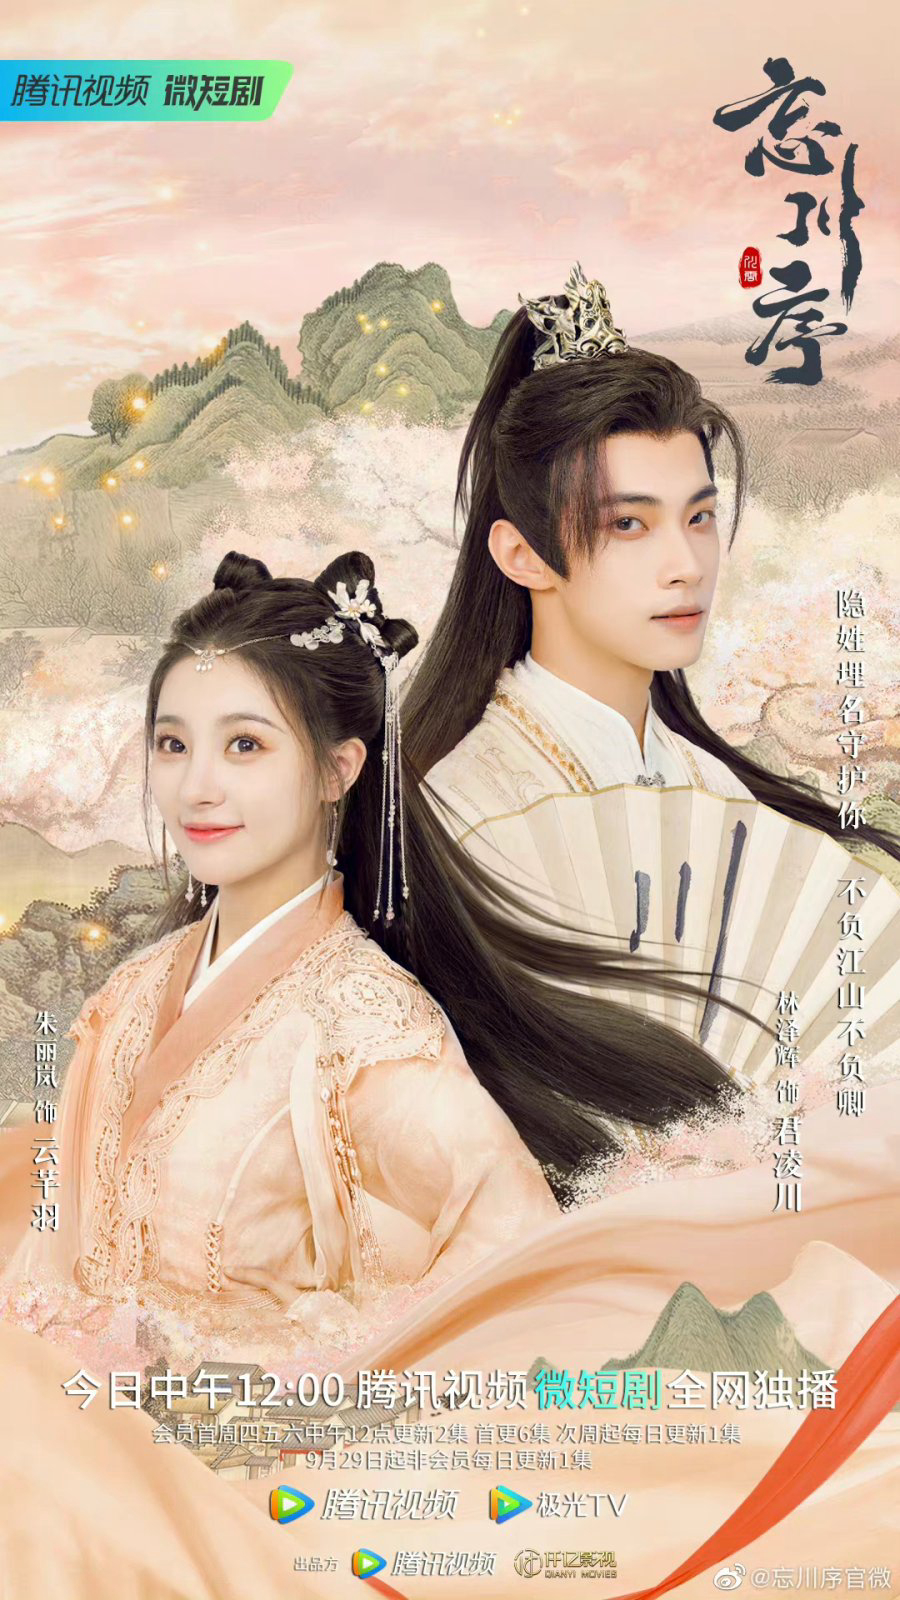 Poster Phim Vong Xuyên Tự (Don't Forget My Love)